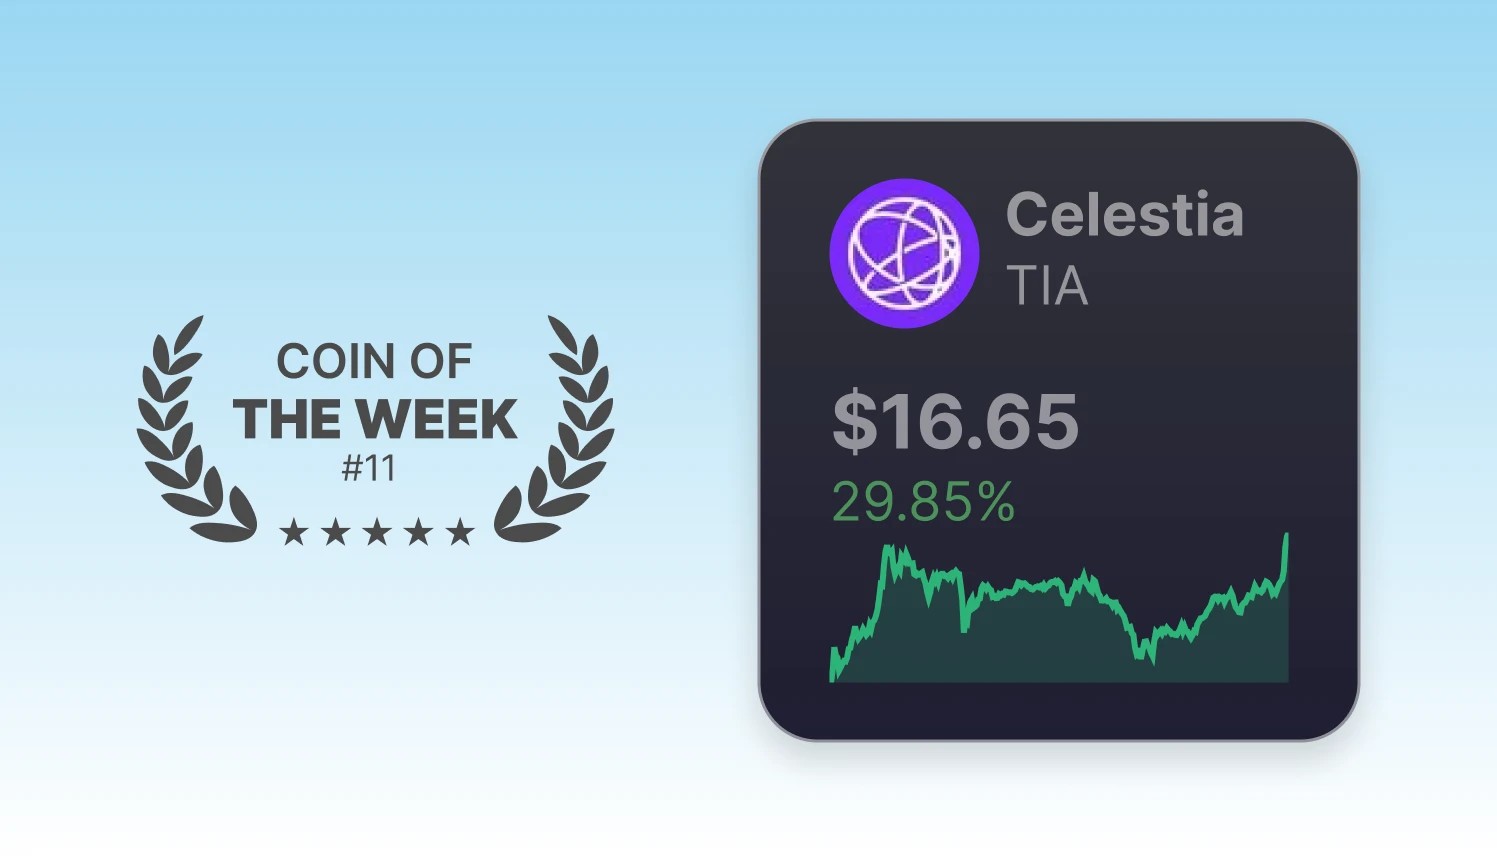 Coin of the Week - TIA - Week 11